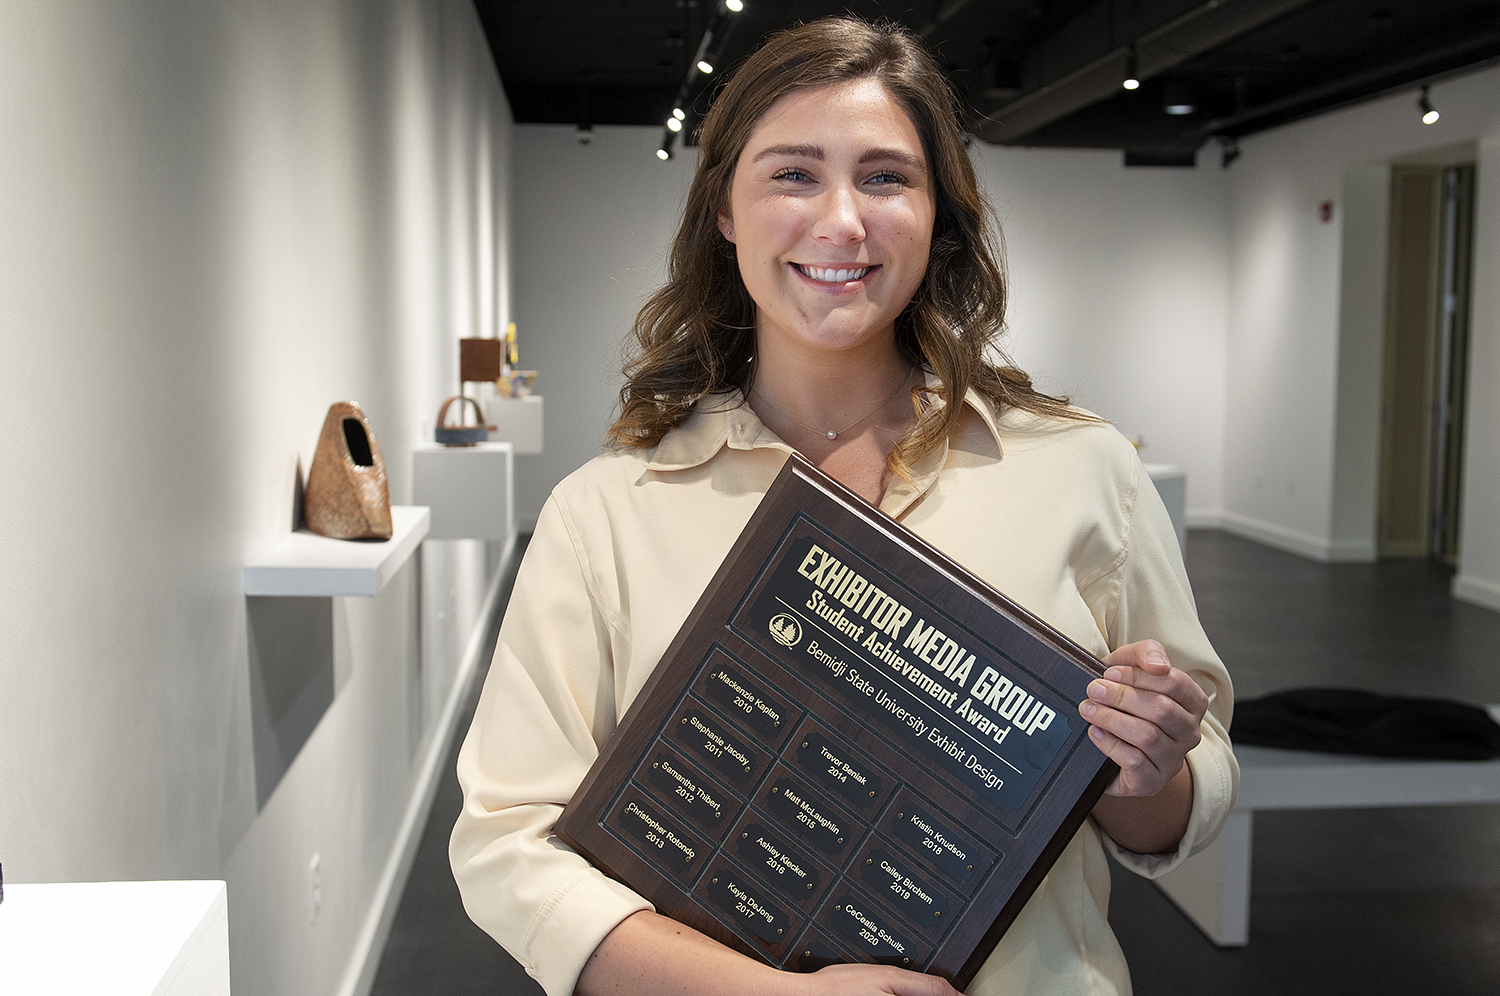 Allison Johanneck holding an exhibitor award in an art gallery at Bemidji State University